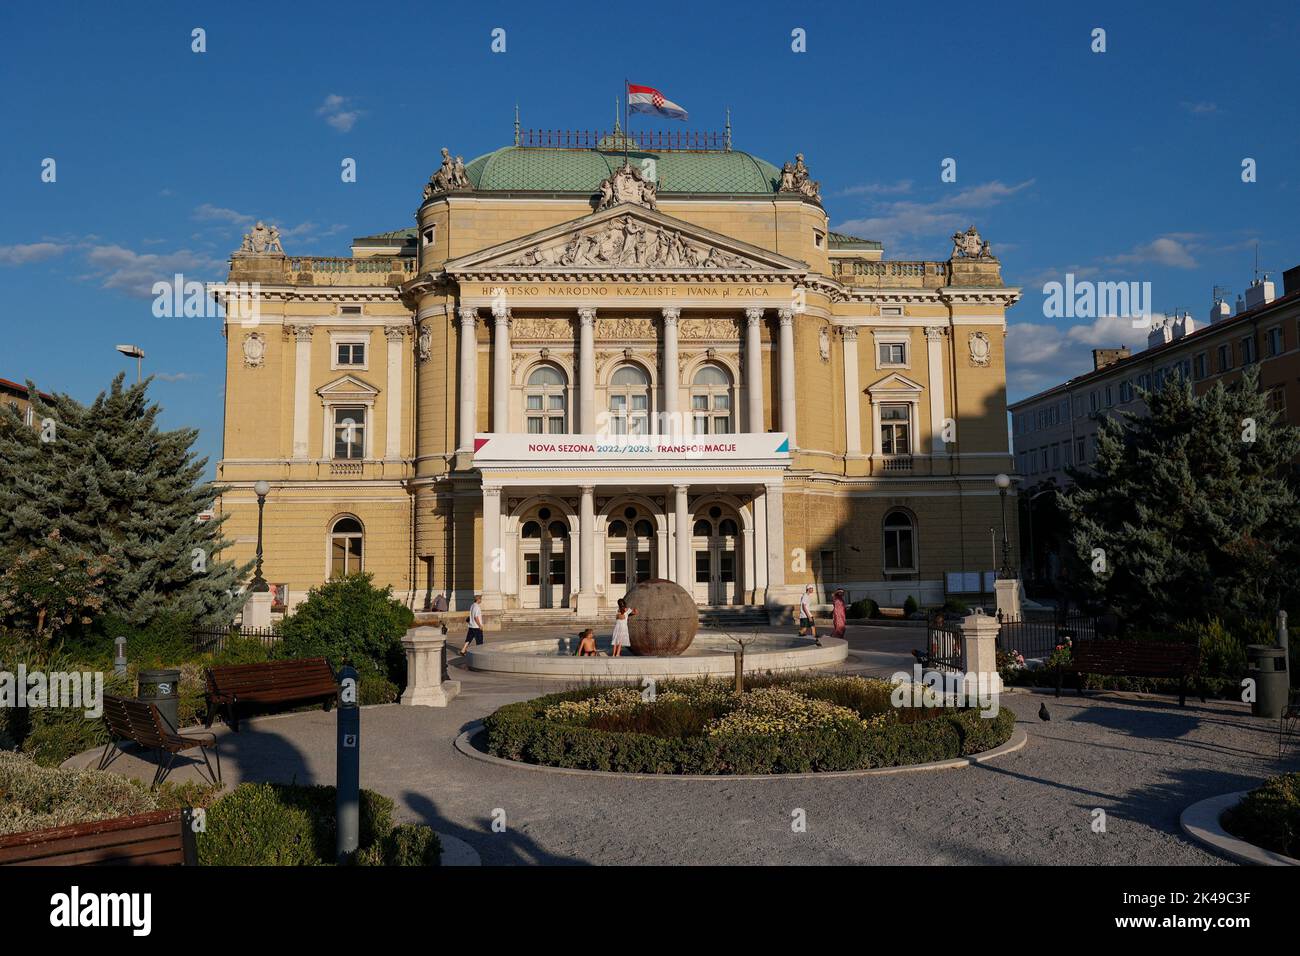 Croatian National Theatre Ivan pl. Zajc in Rijeka,Croatia Stock Photo